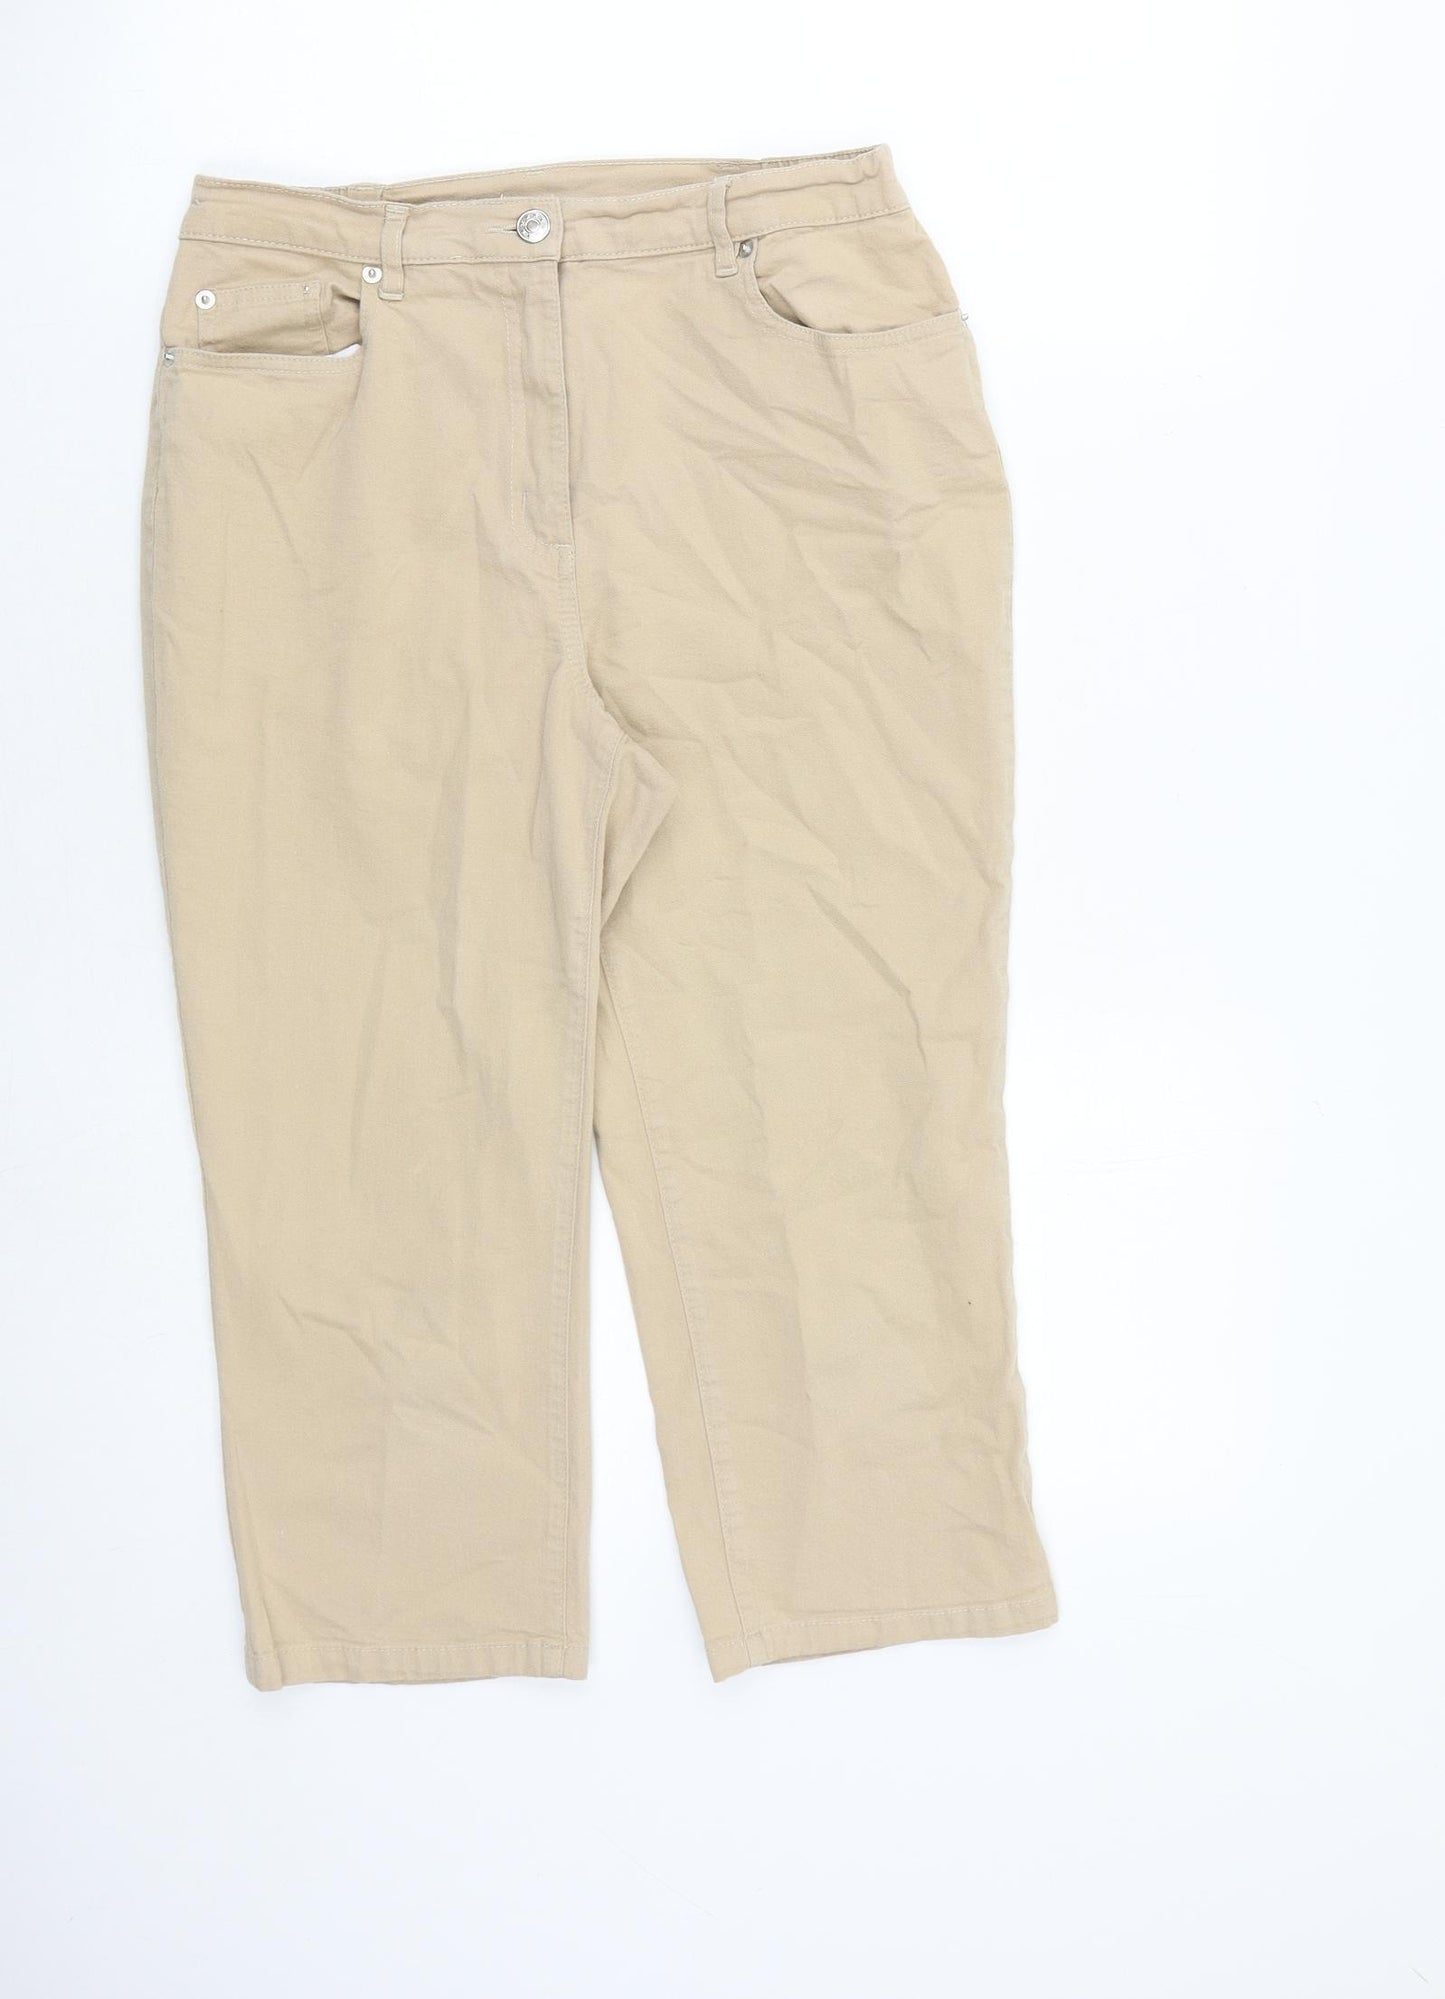 Damart Womens Beige Cotton Cropped Jeans Size 12 L20 in Regular Zip